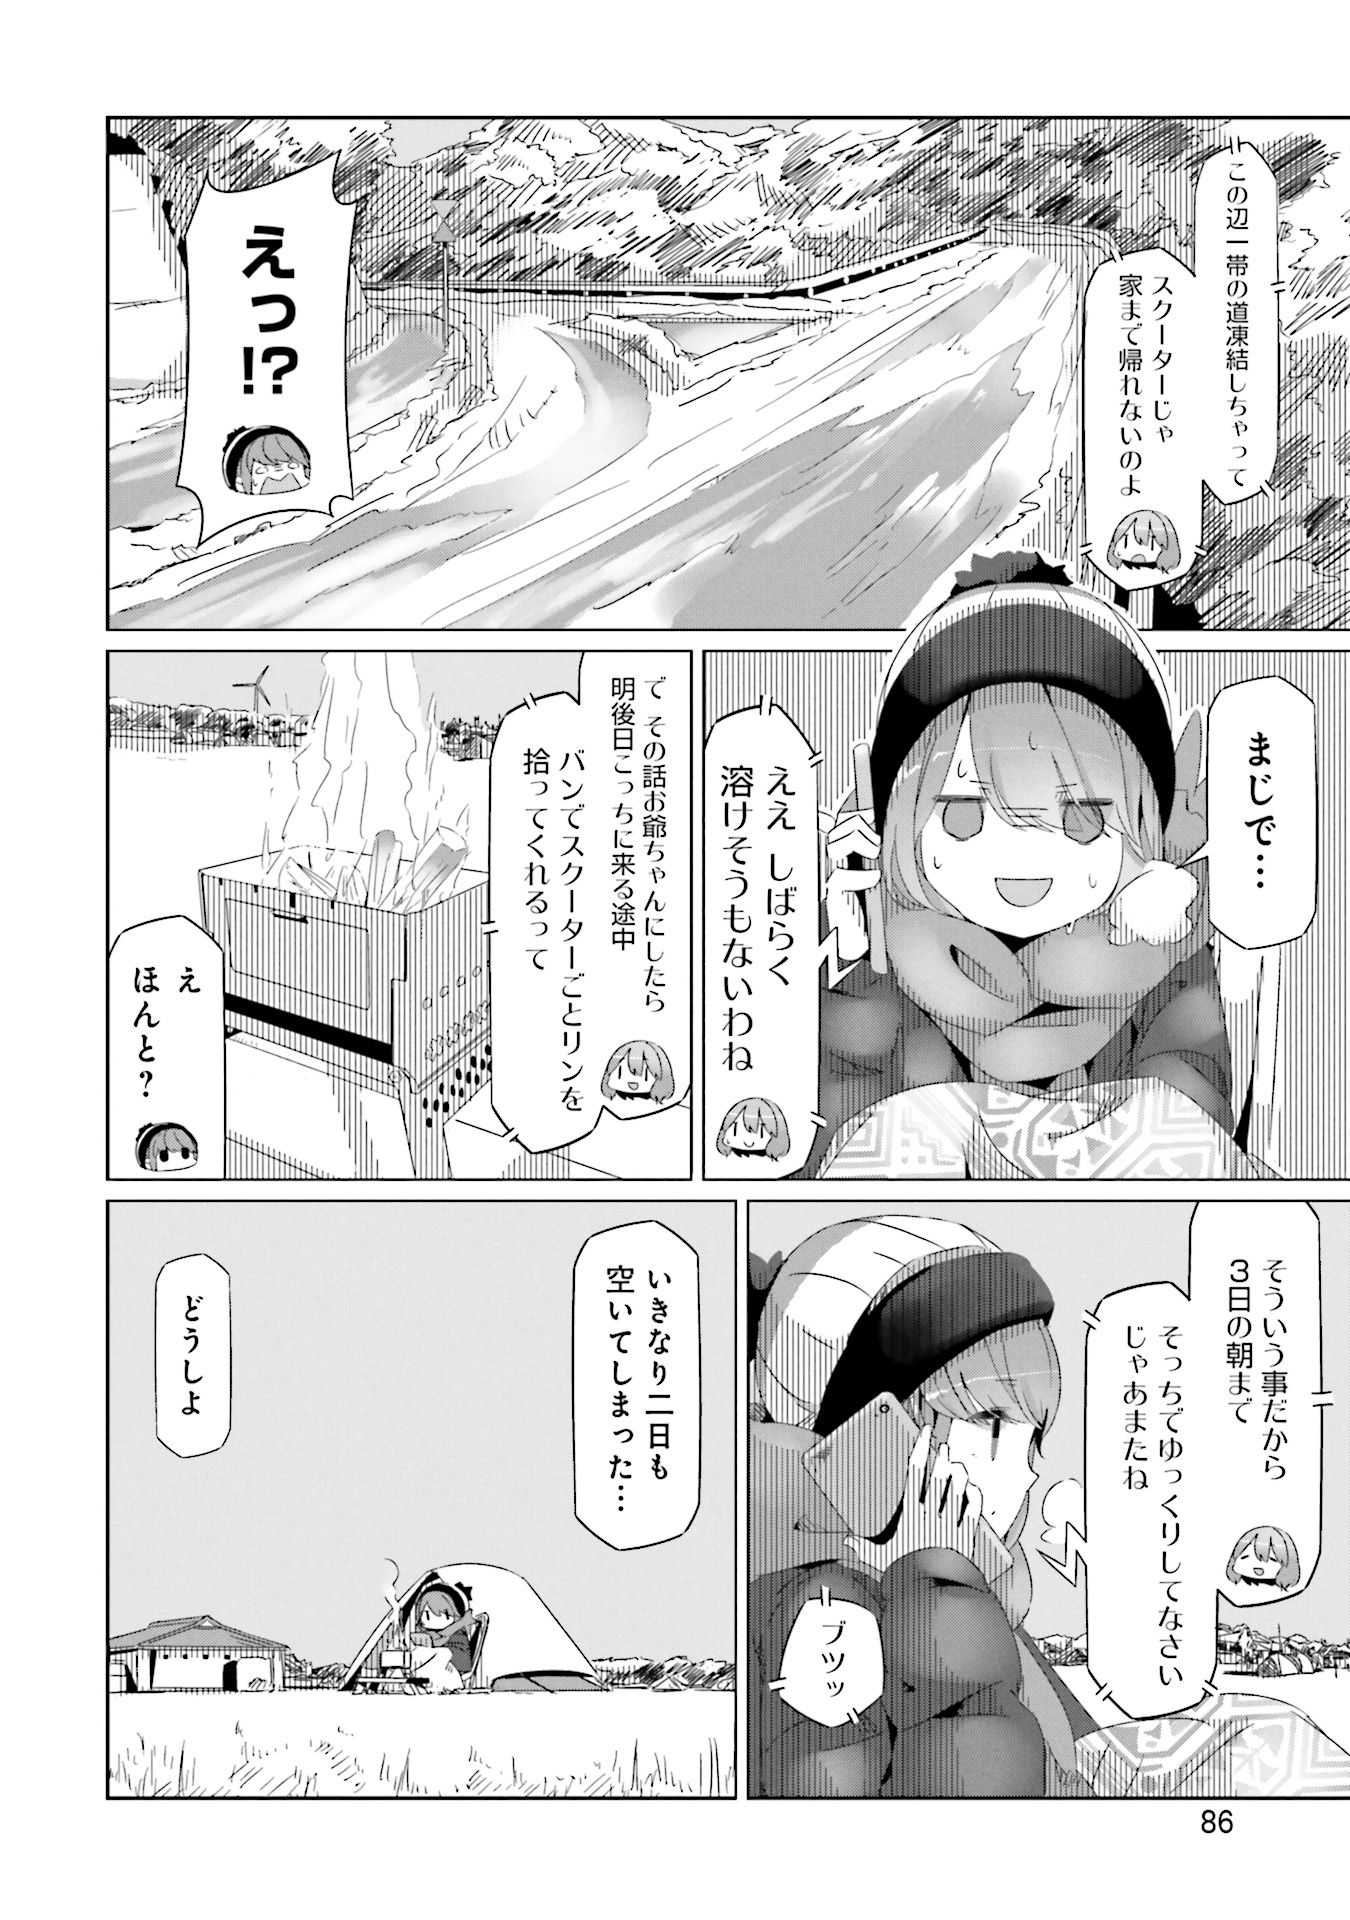 Yuru Camp - Chapter 26 - Page 28